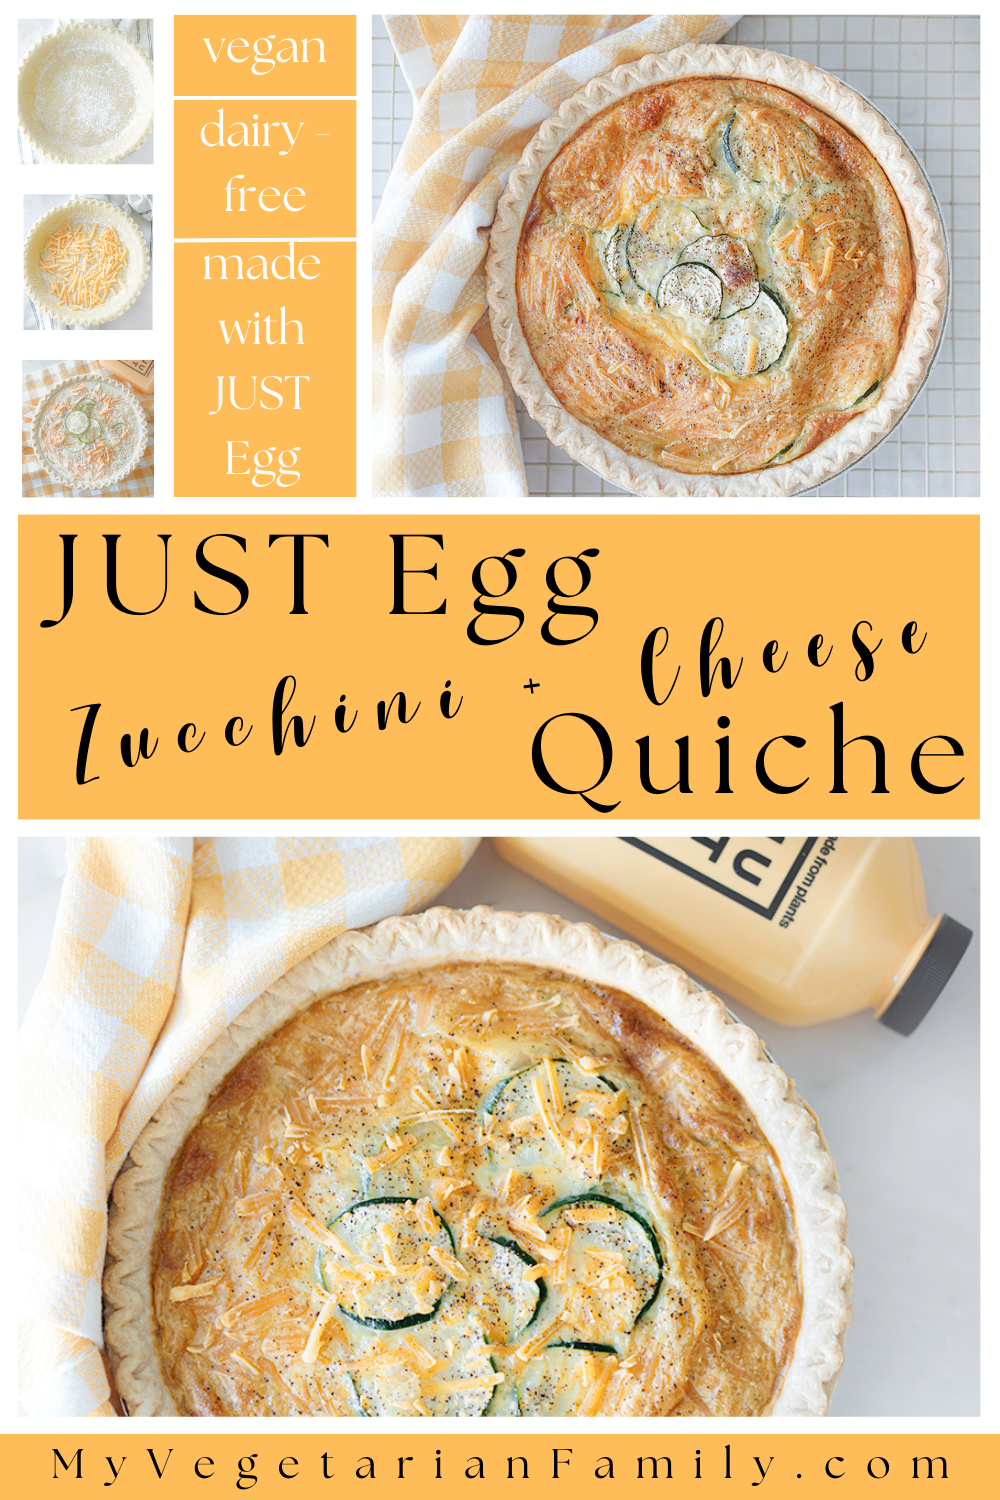 JUST Egg Vegan Zucchini Quiche | My Vegetarian Family #veganquiche #justeggquiche